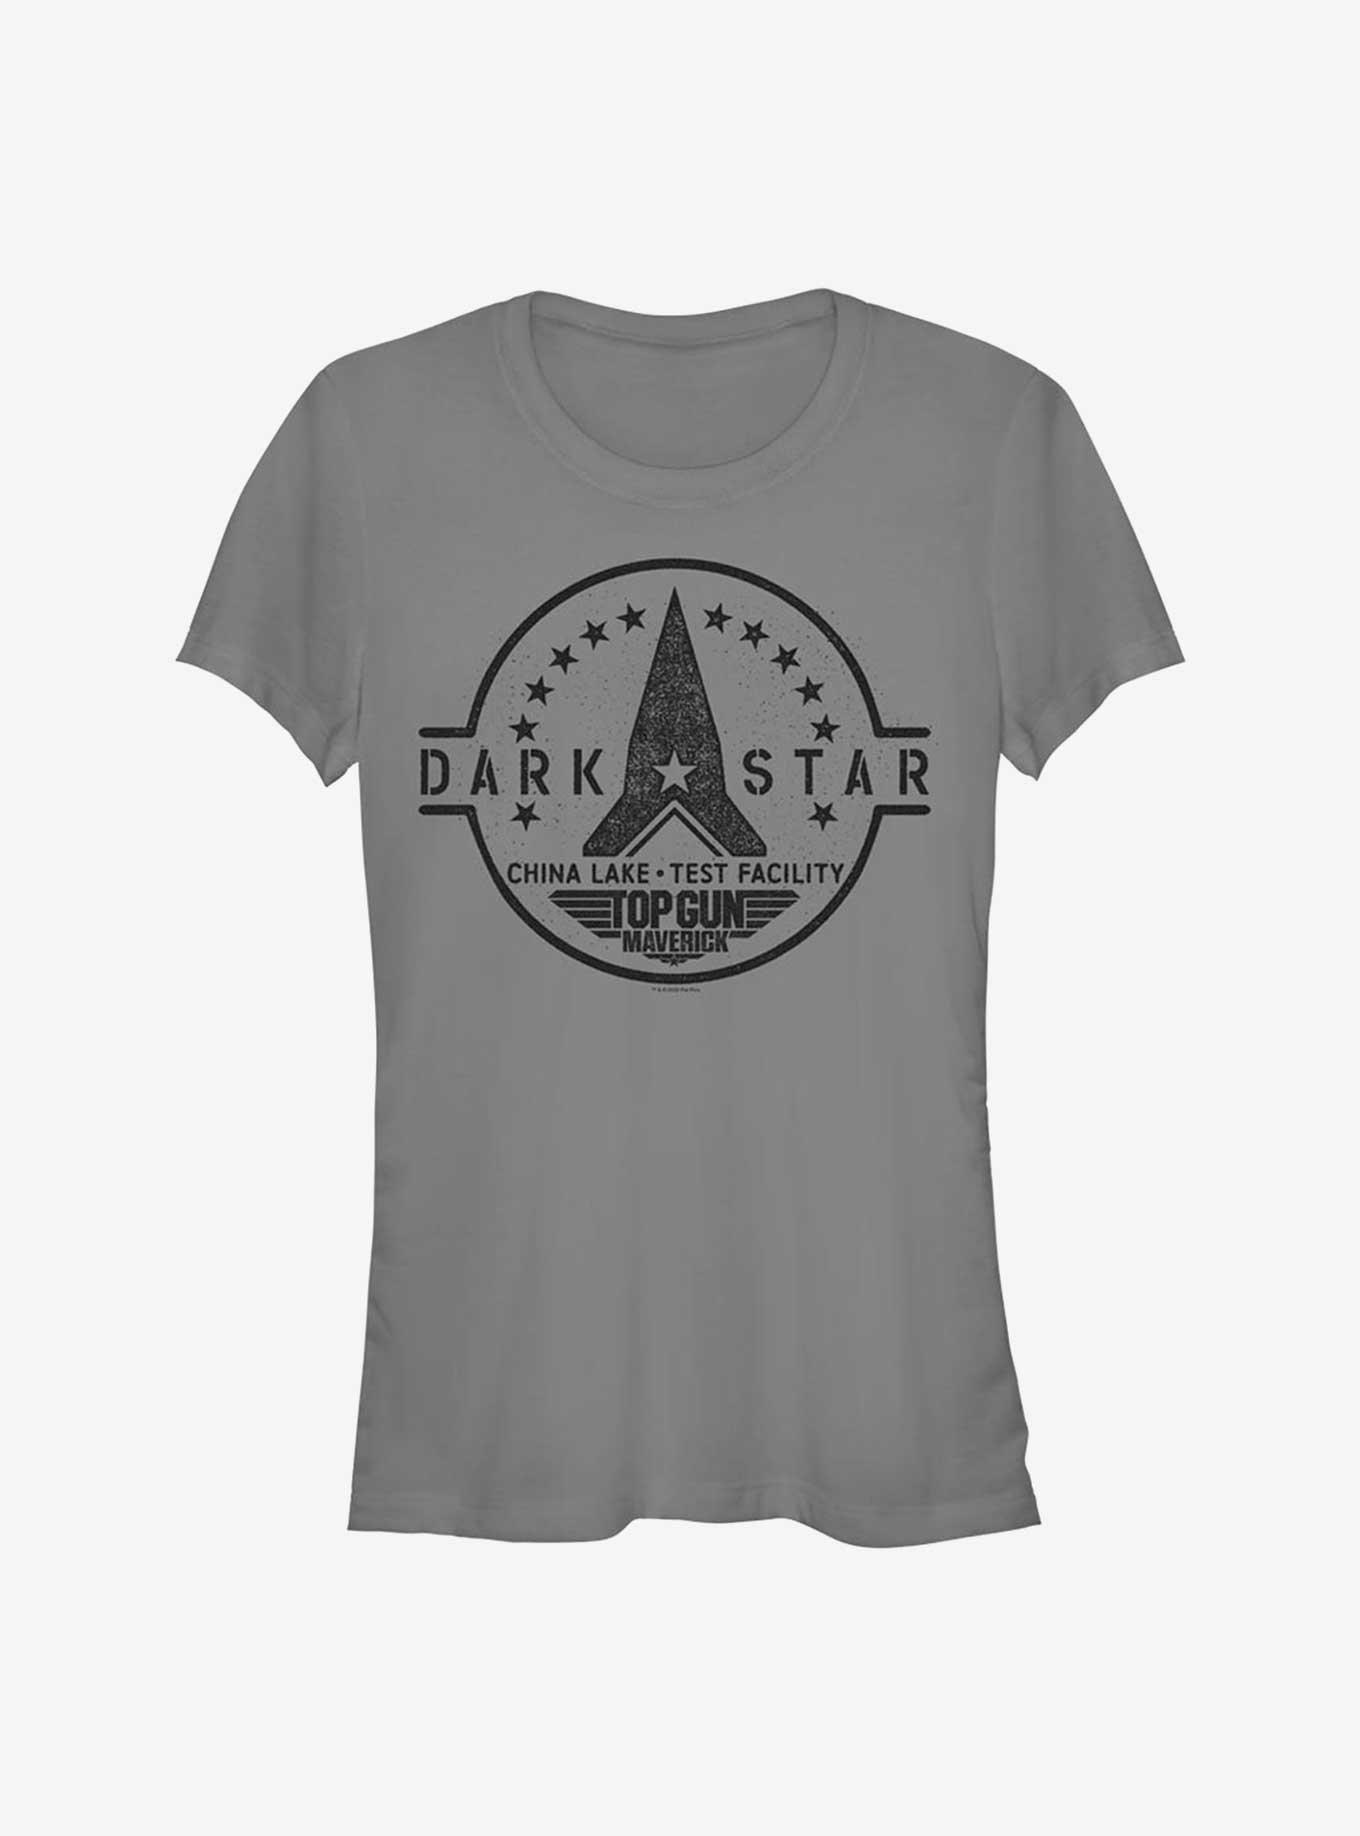 Top Gun Maverick Dark Star Girls T-Shirt, CHARCOAL, hi-res